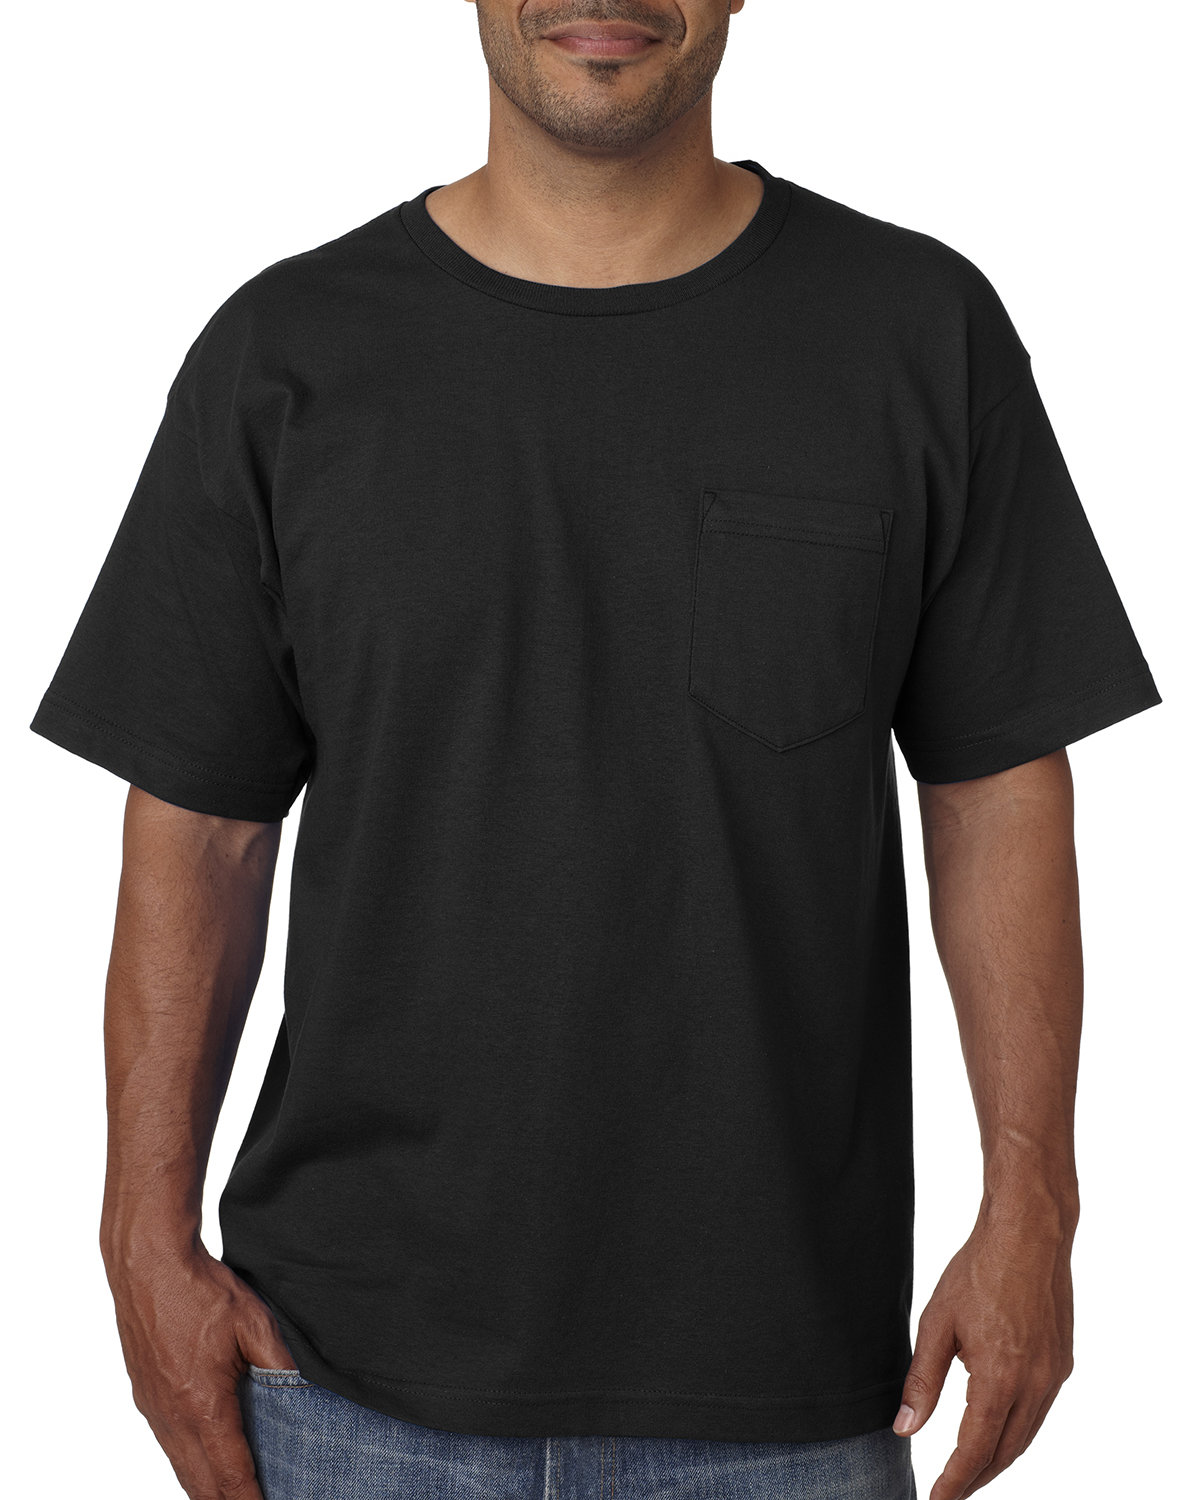 Bayside Adult Short-Sleeve T-Shirt with Pocket BLACK 